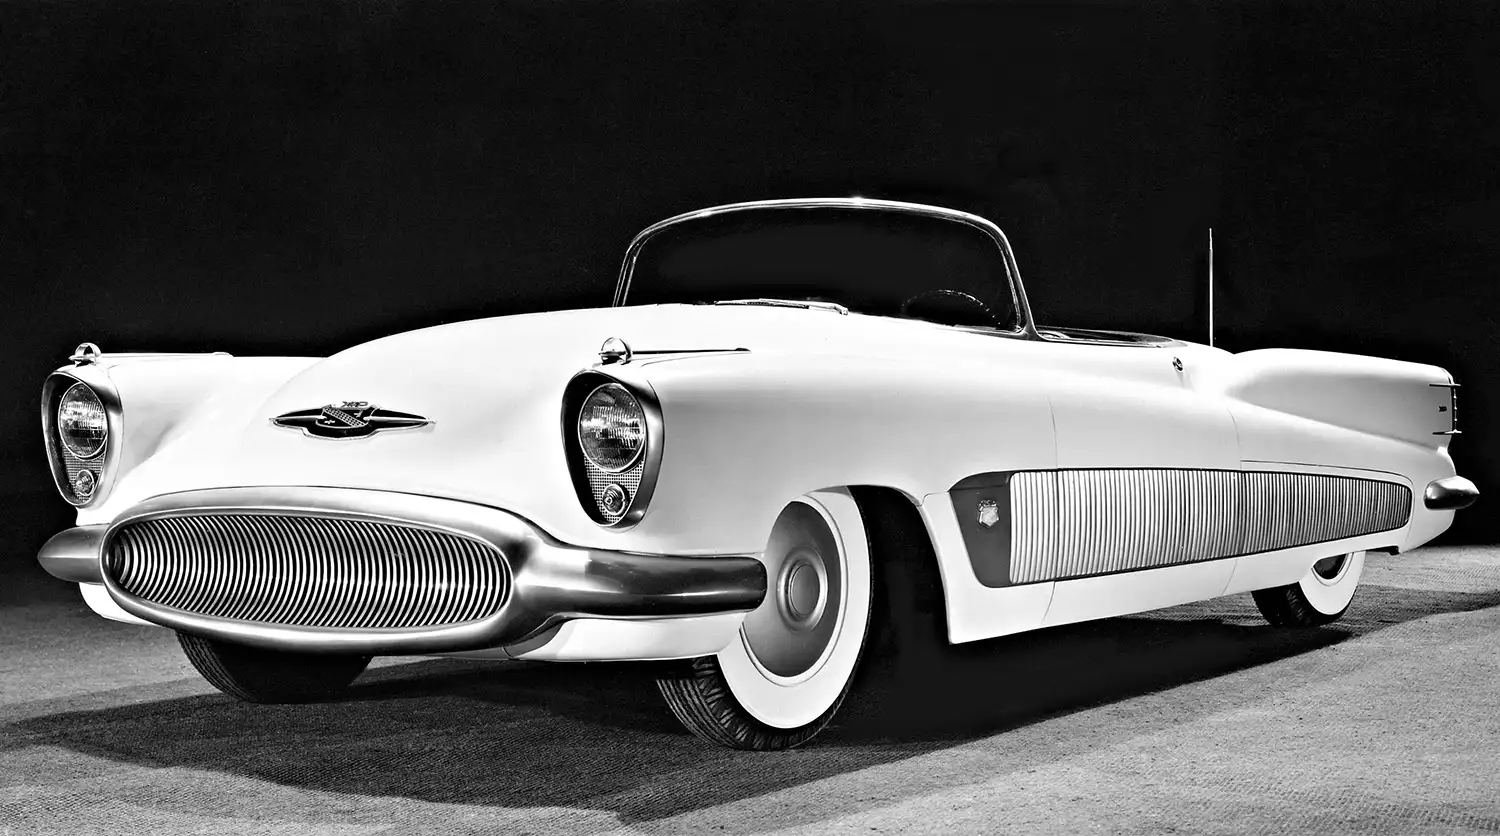 Buick XP-300: A 1950s Vision of Automotive Innovation